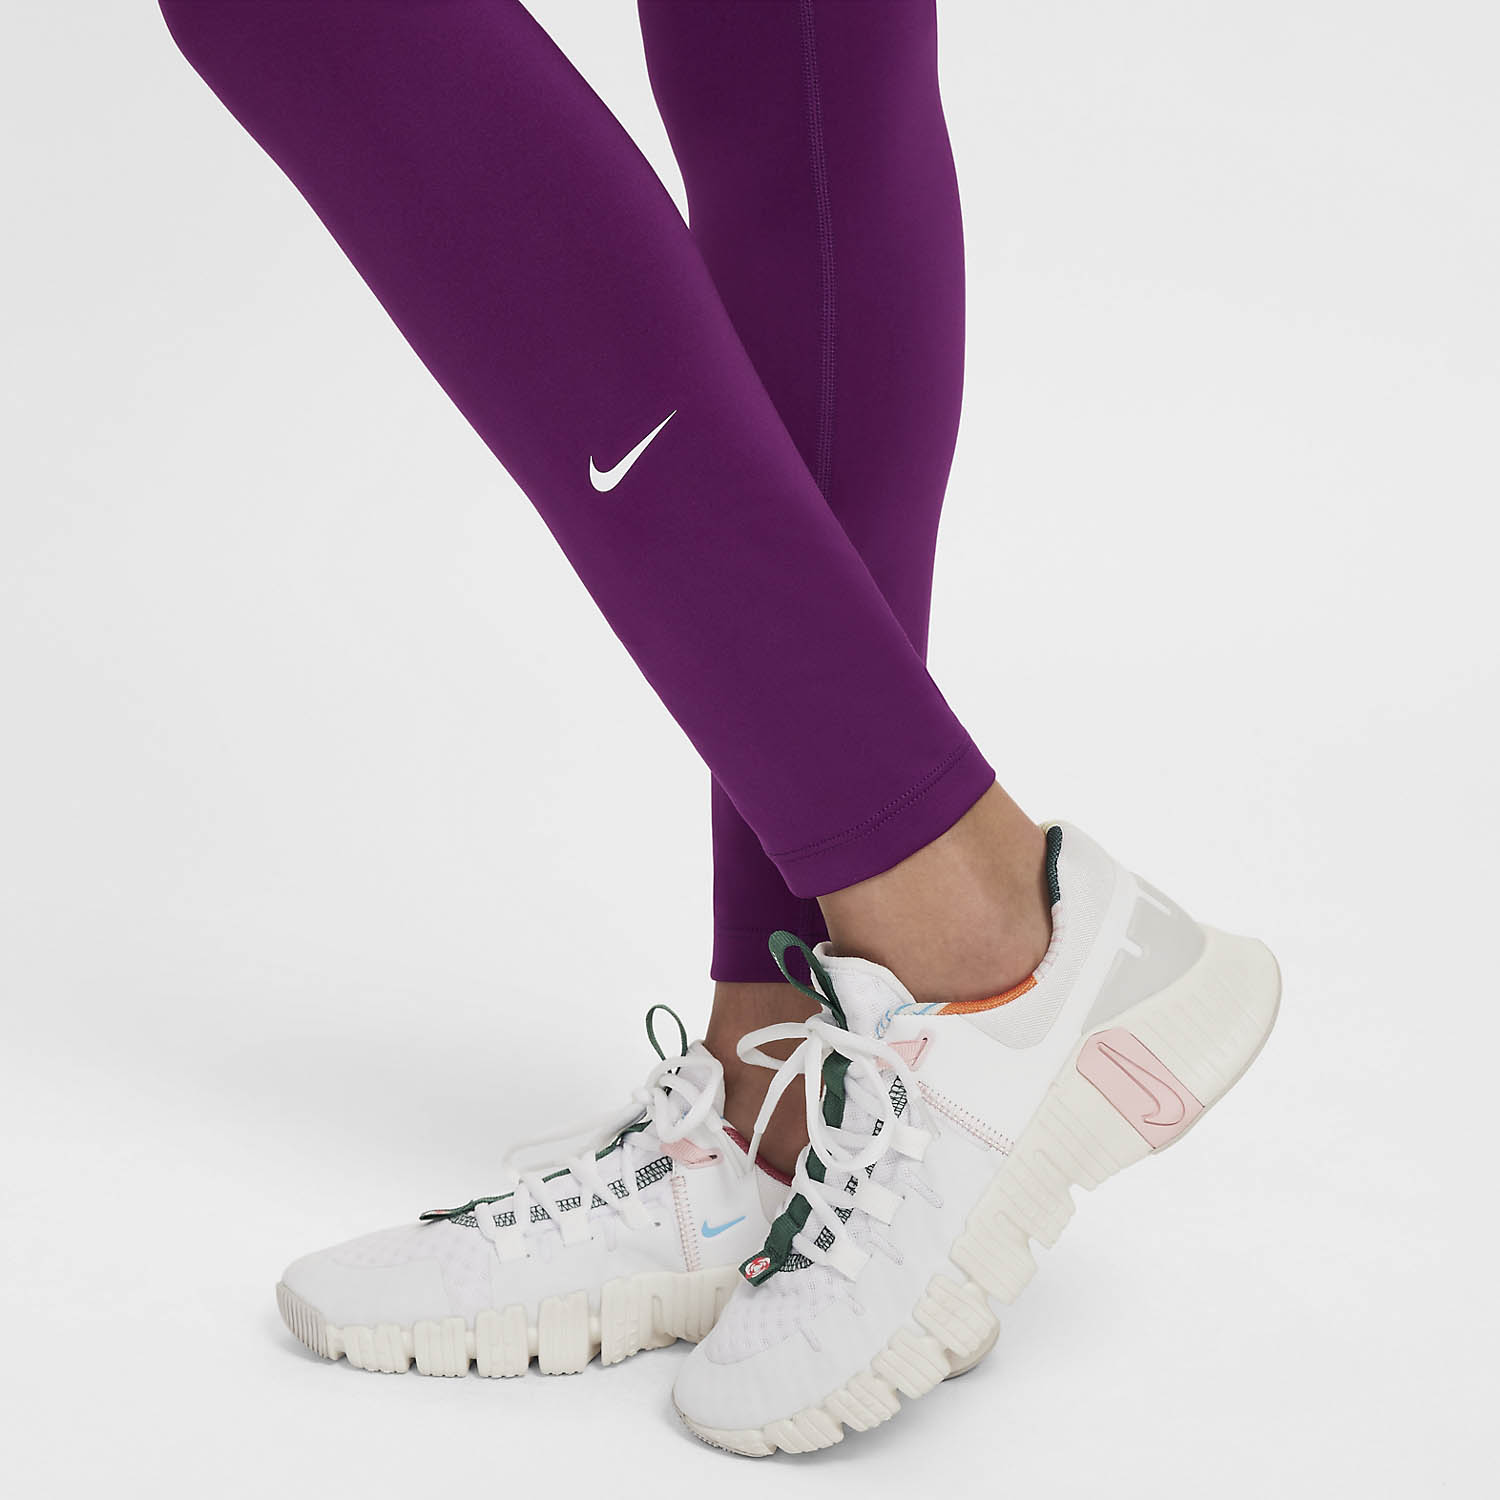 Nike Dri-FIT One Tights Girl - Viotech/White